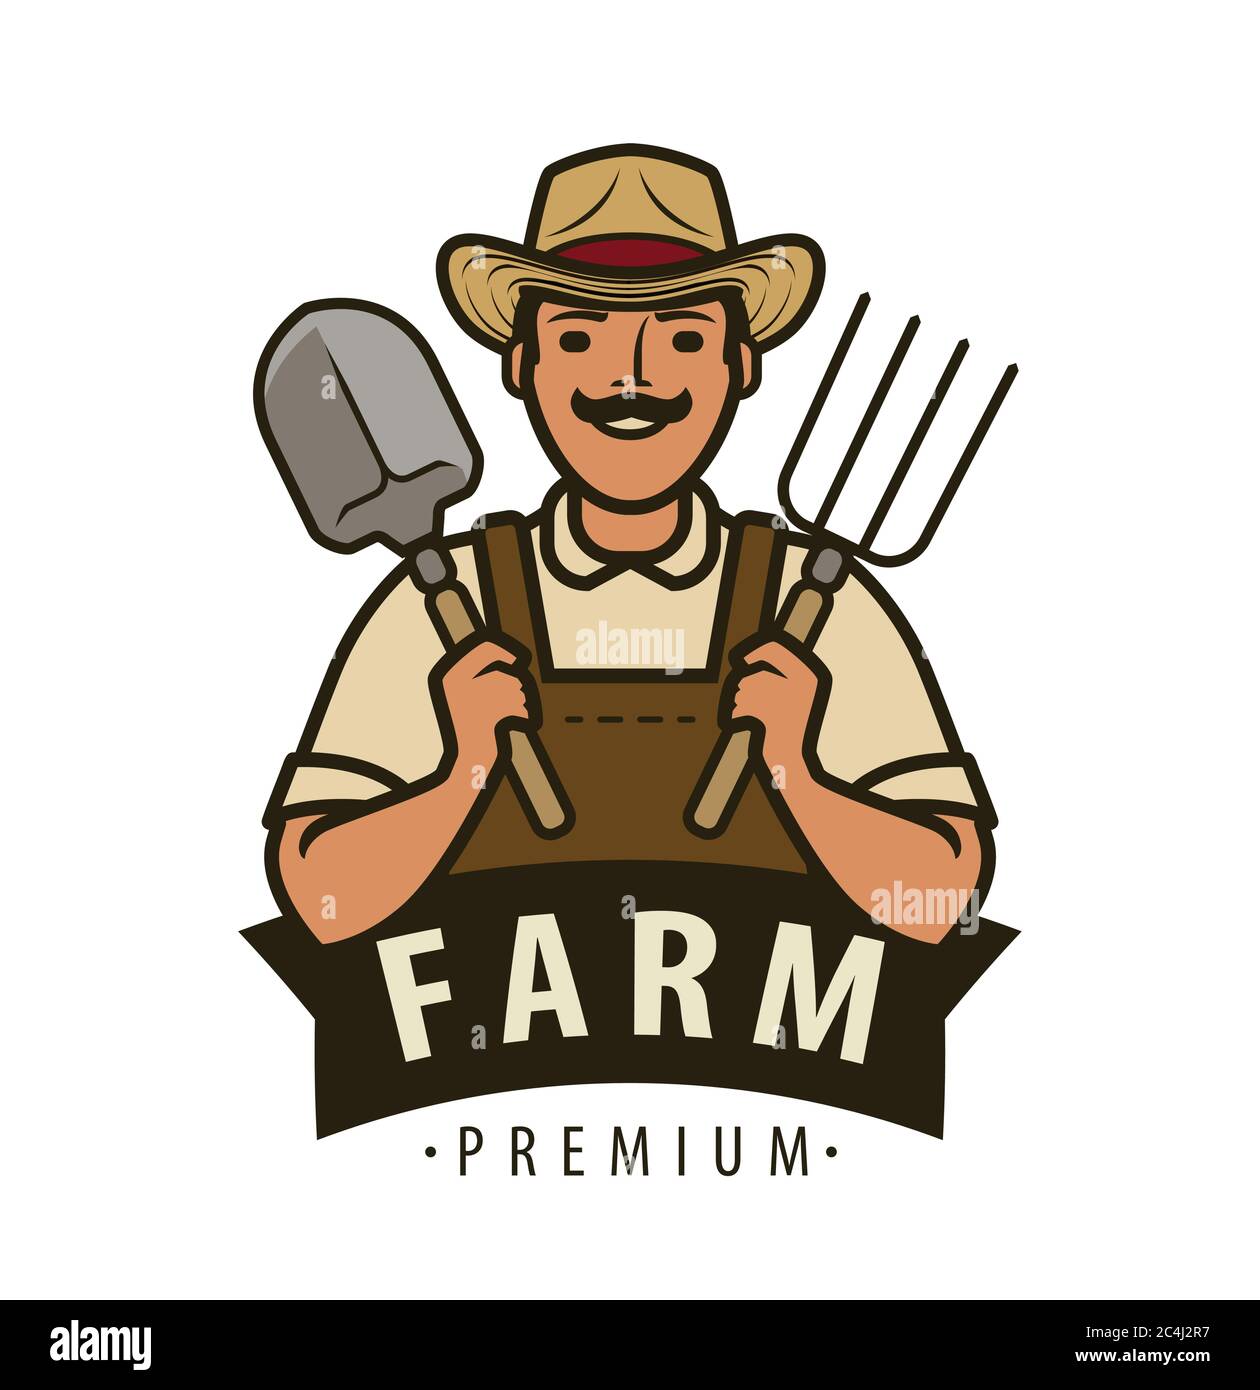 Farm logo or label. Agriculture, farmer vector illustration Stock Vector